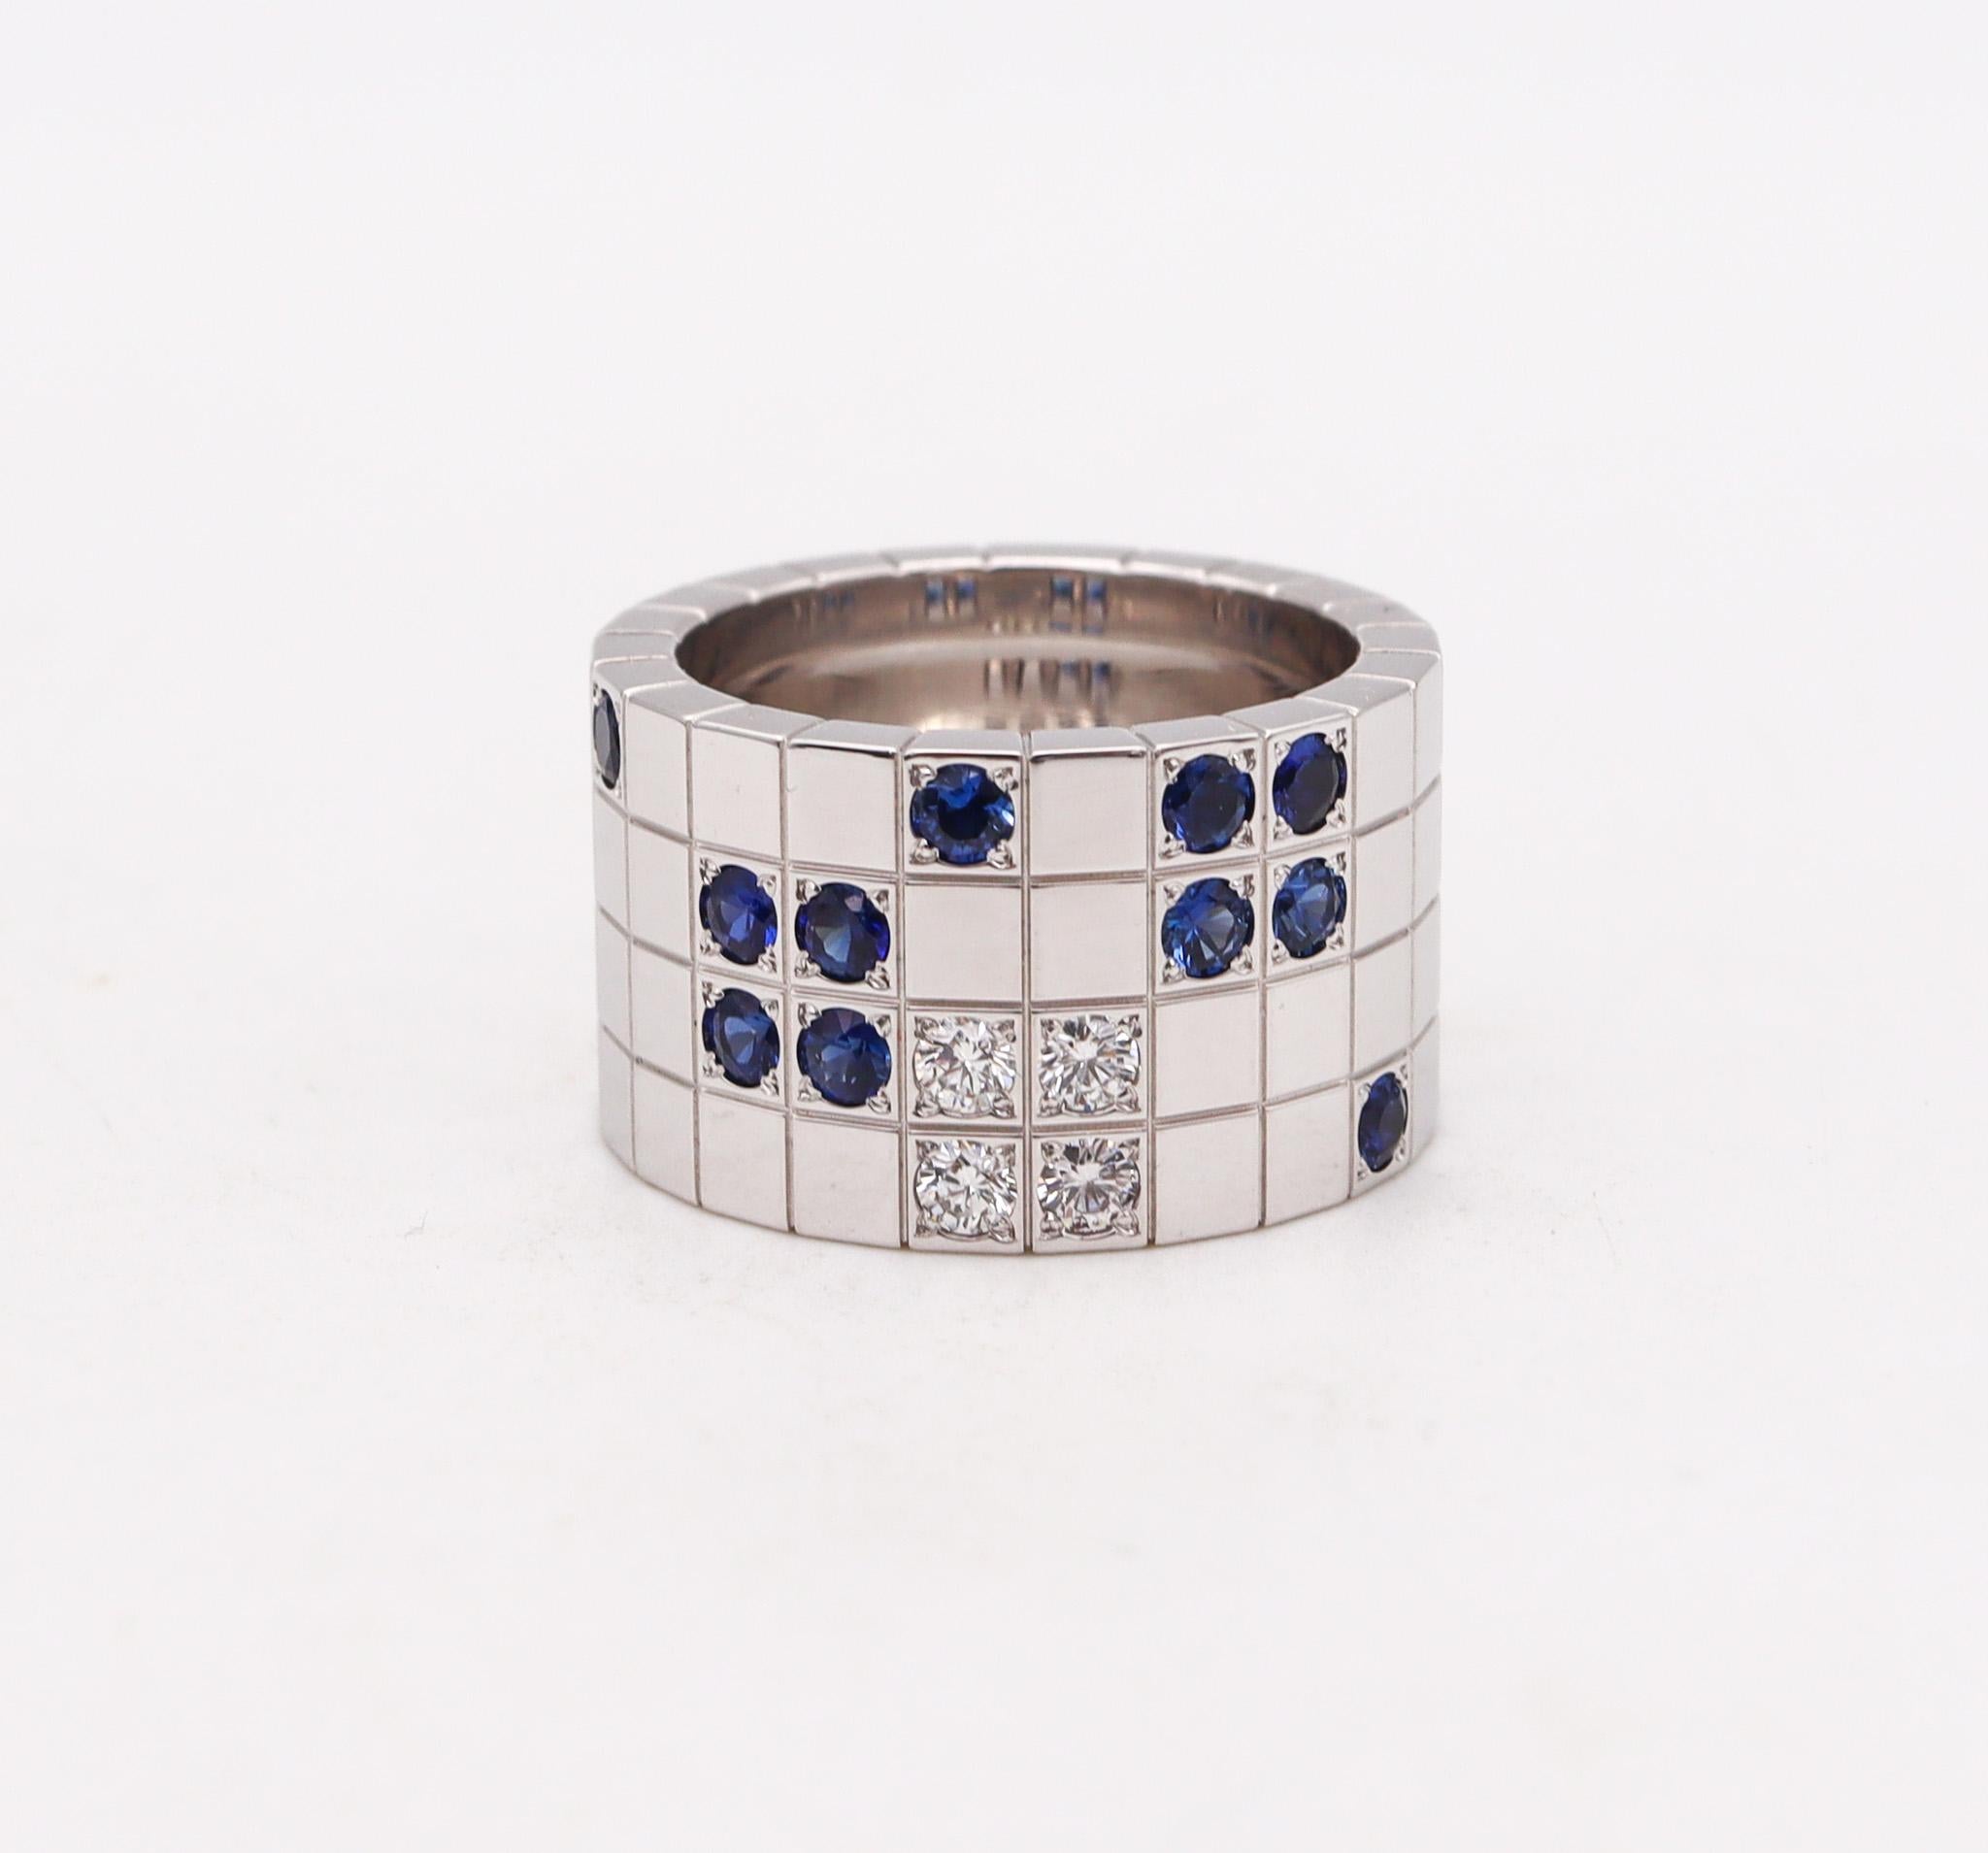 Modernist Cartier Paris Lanieres Ring 18 Kt White Gold with 1.05 Ctw Diamonds & Sapphires